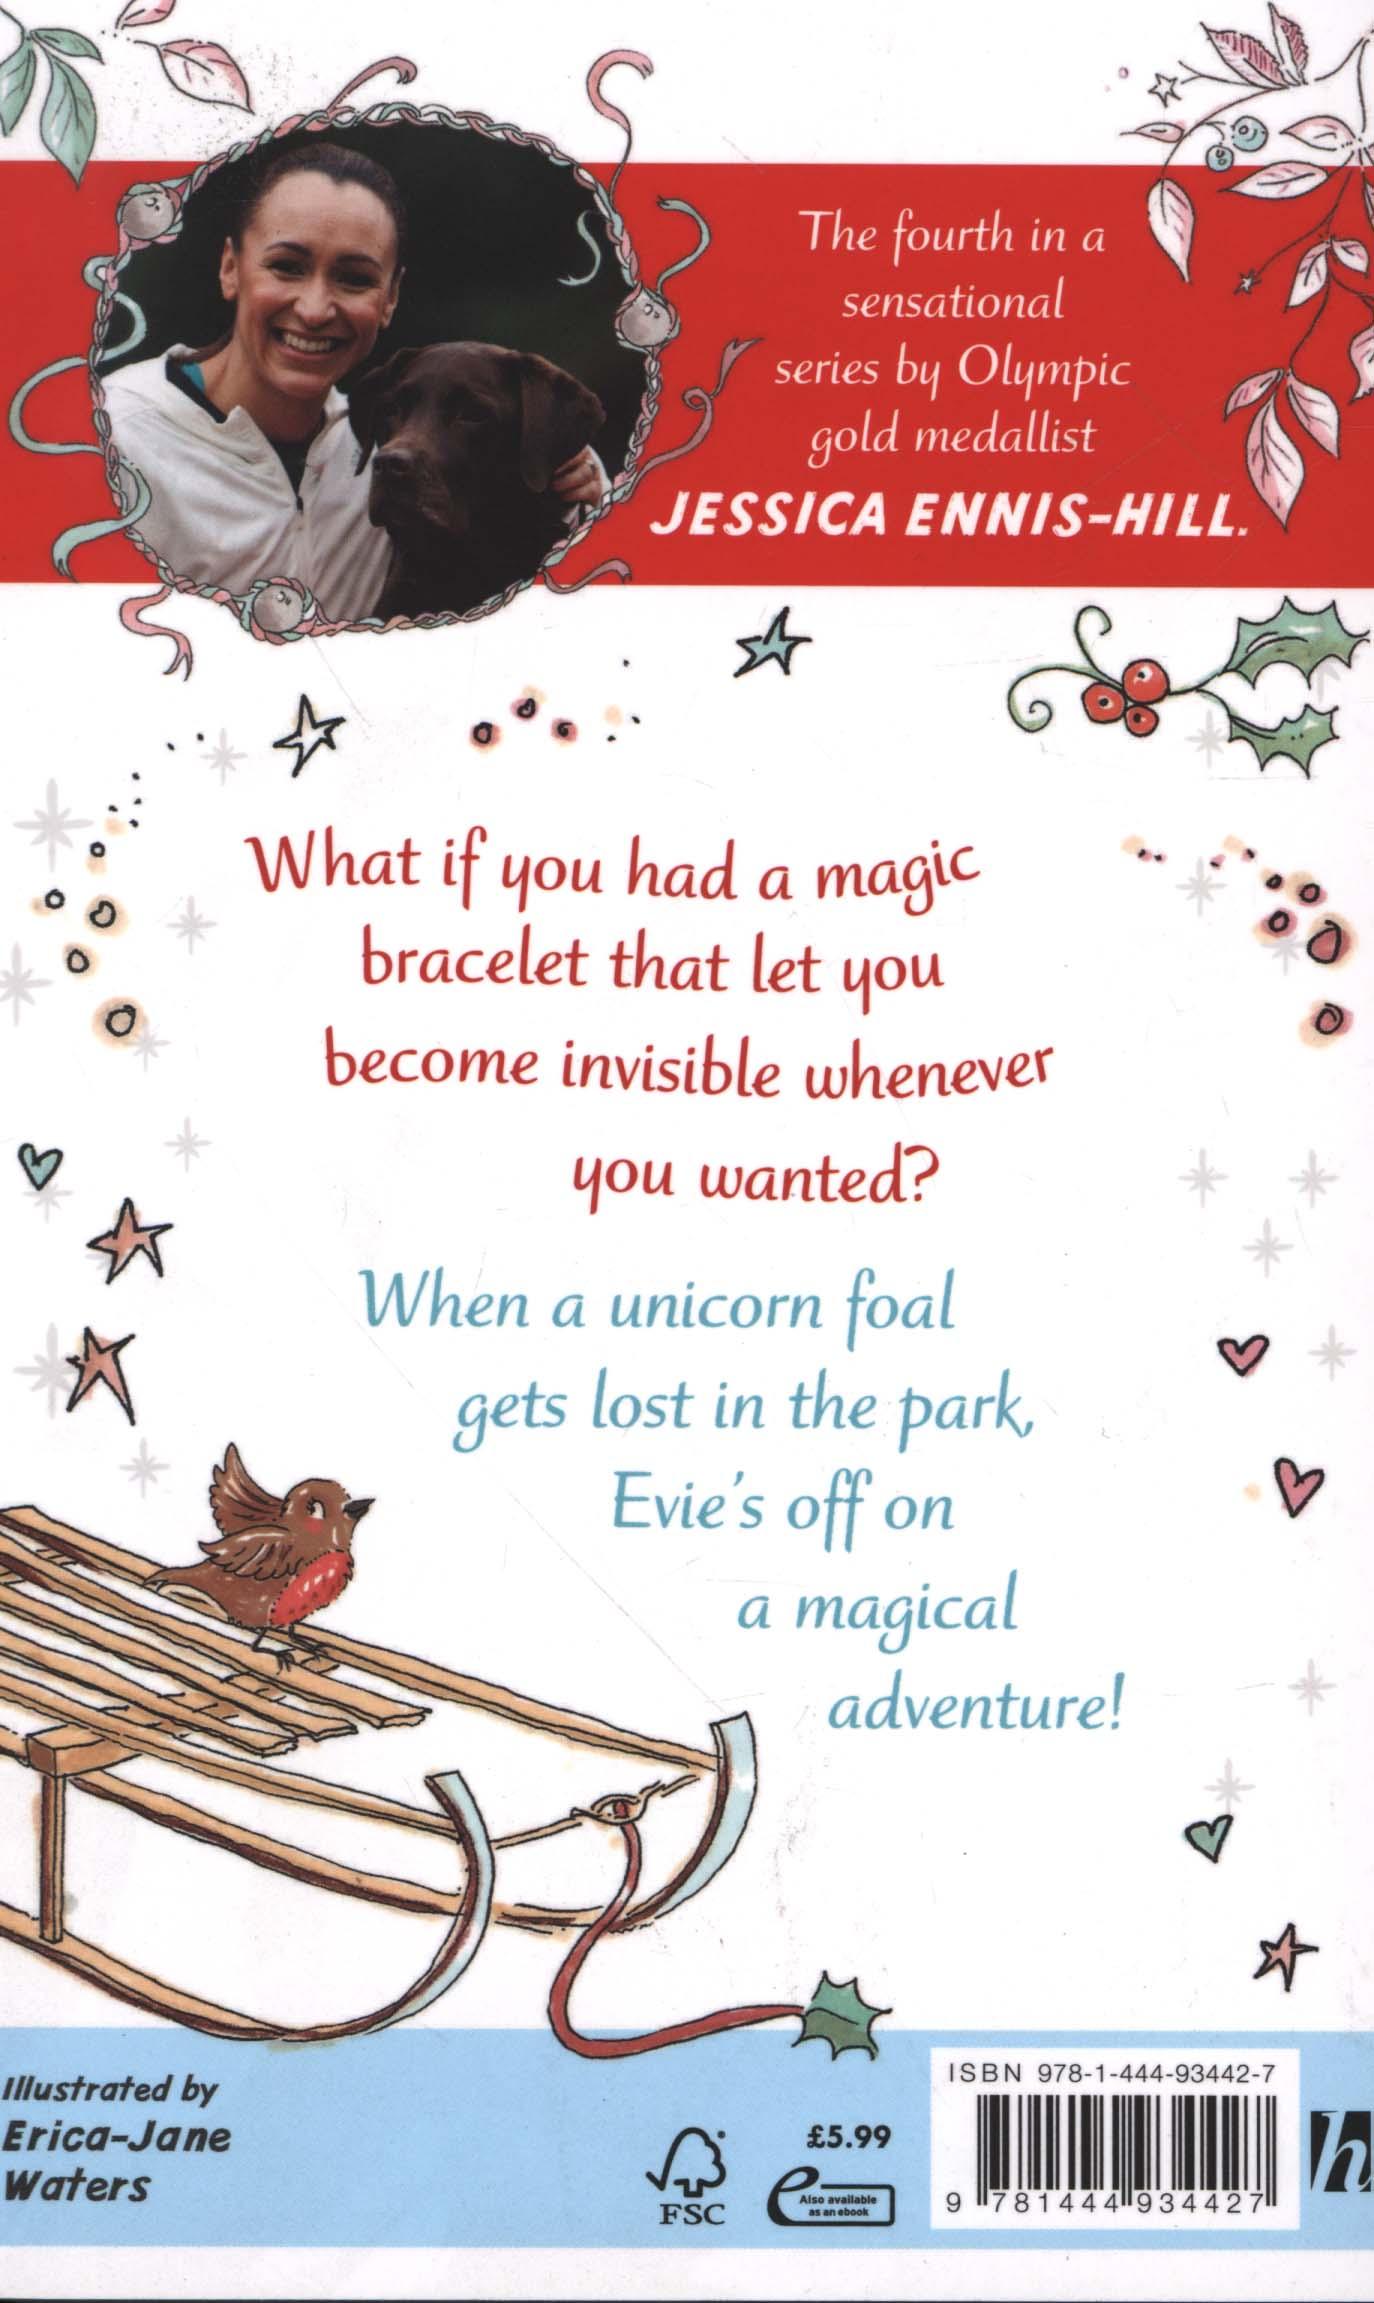 Evie's Magic Bracelet: The Unicorn's Foal